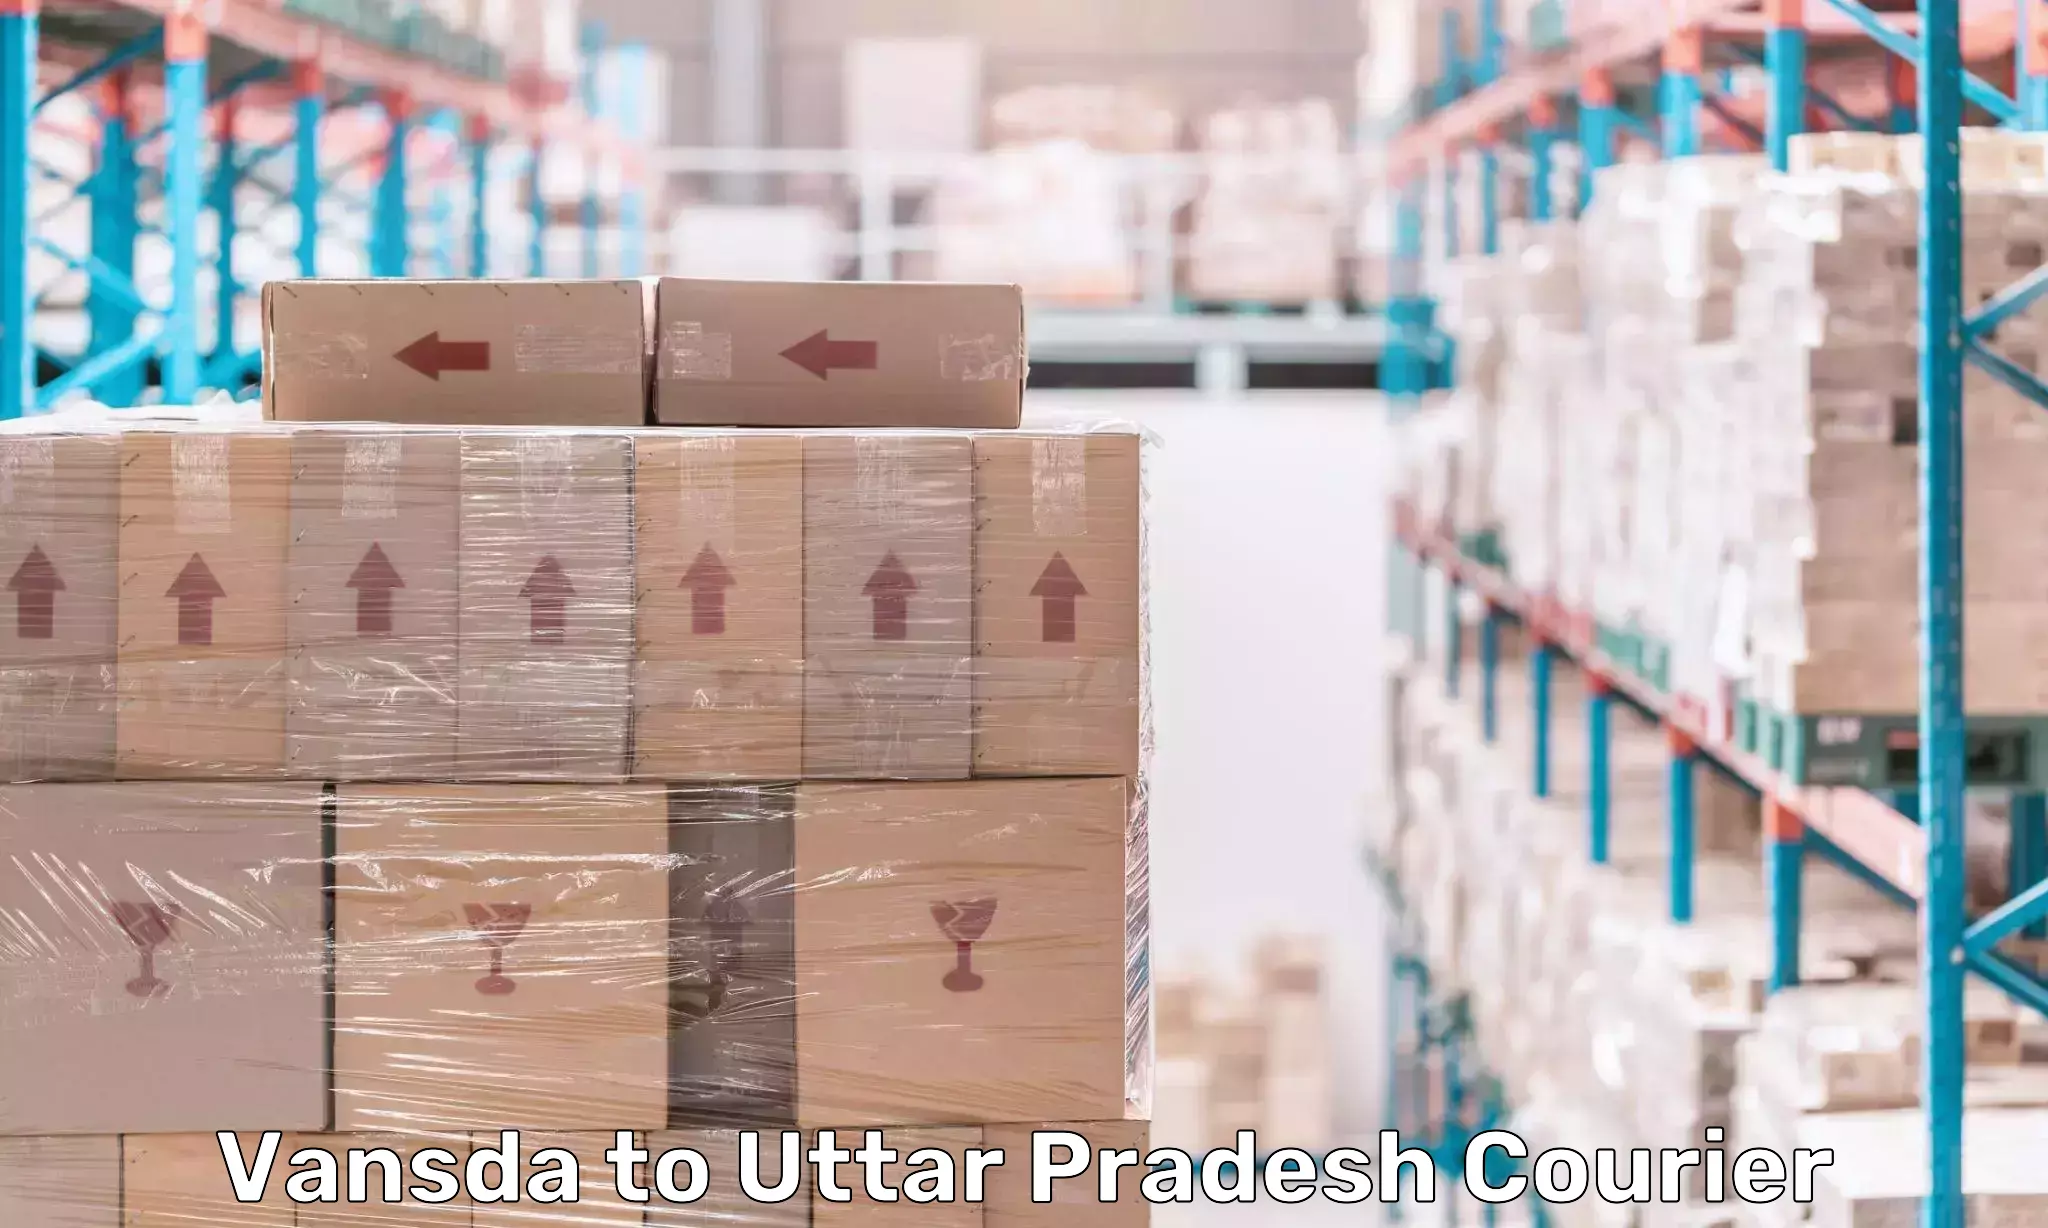 International courier networks Vansda to Uttar Pradesh